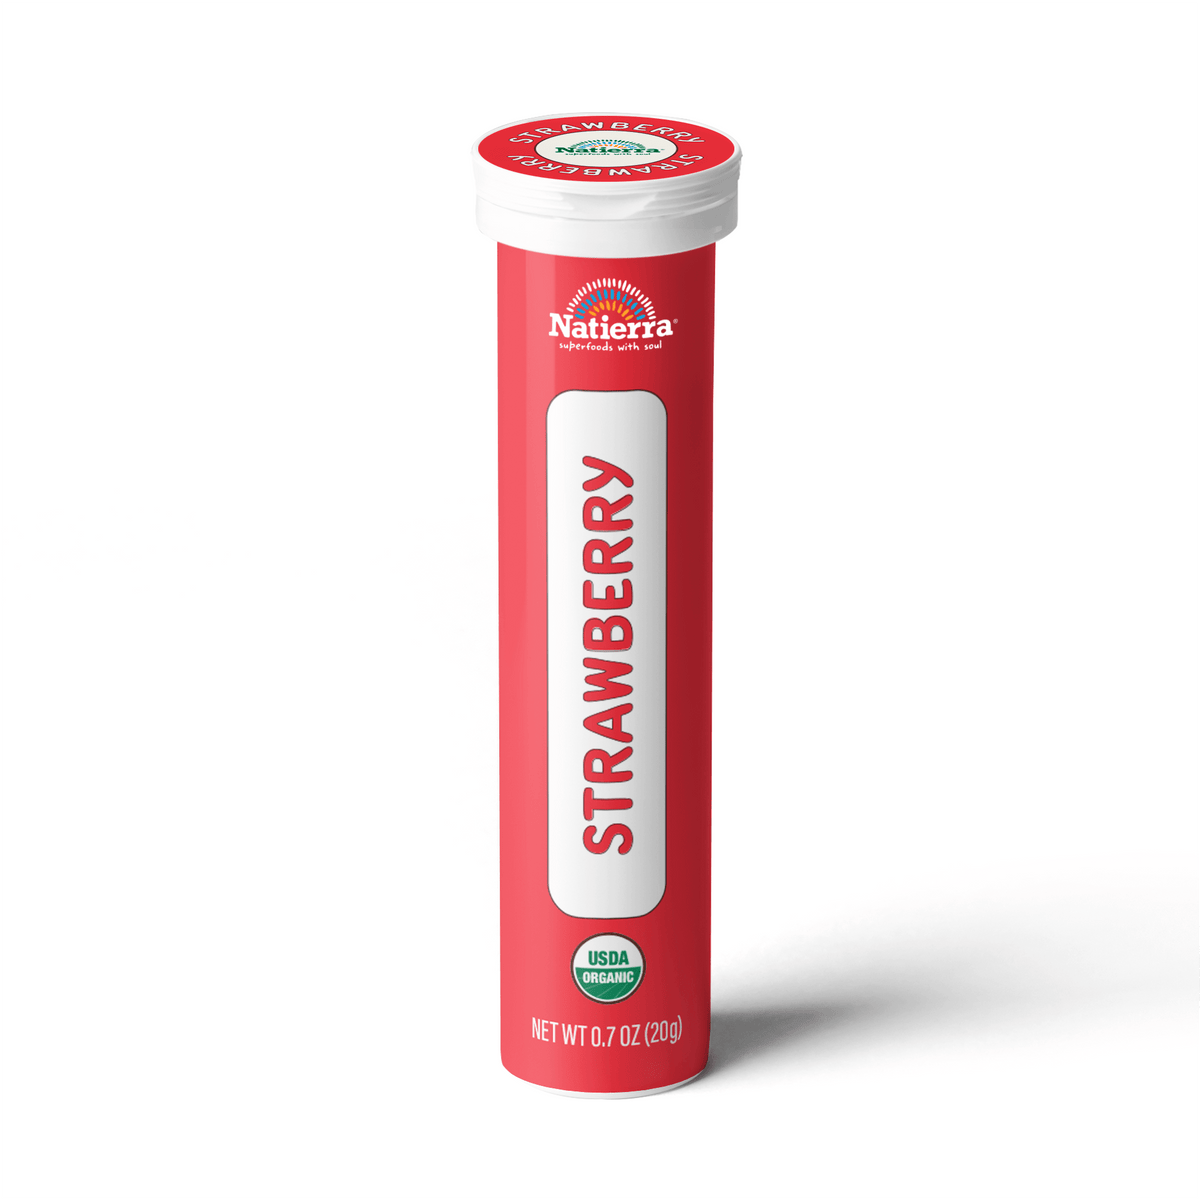 Natierra Strawberry Smoothie Powder 0.7 oz tube